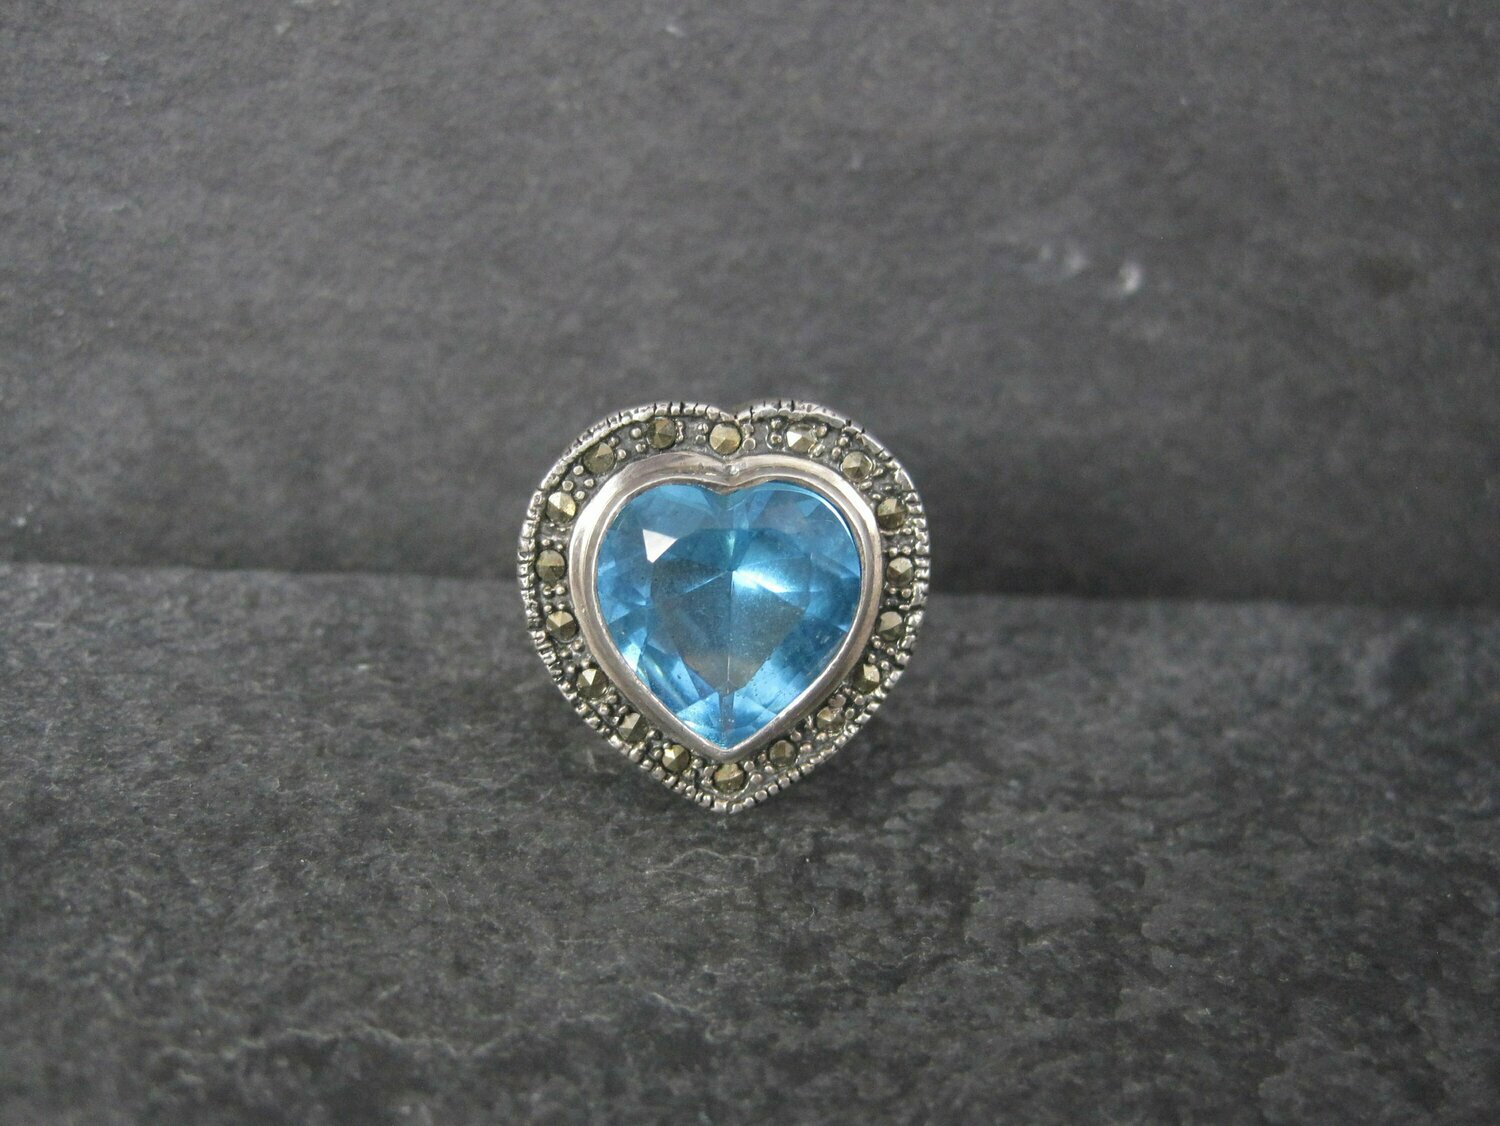 Vintage Marcasite Topaz Heart Ring Size 8